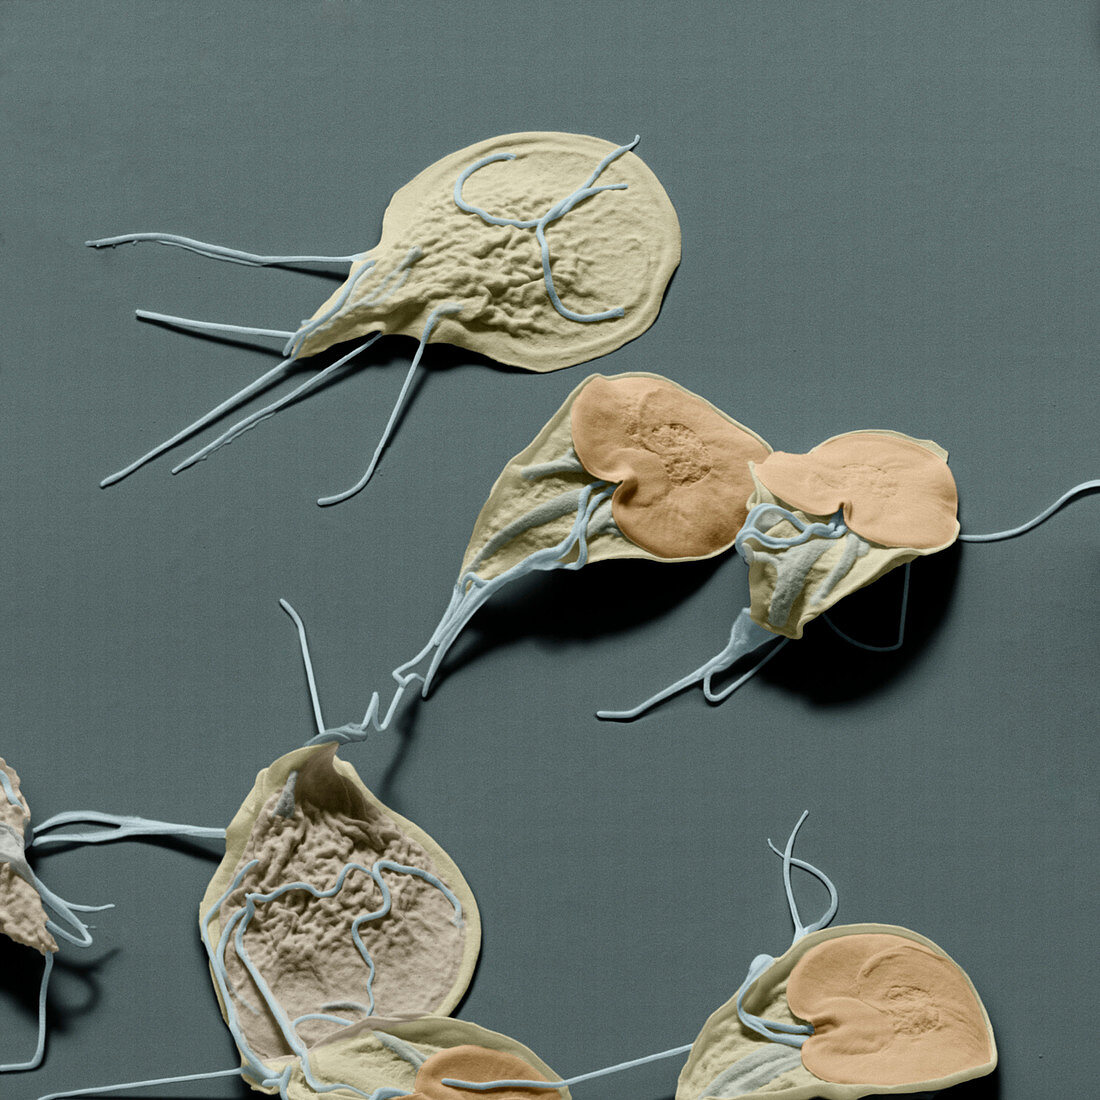 Giardia lamblia protozoa, SEM